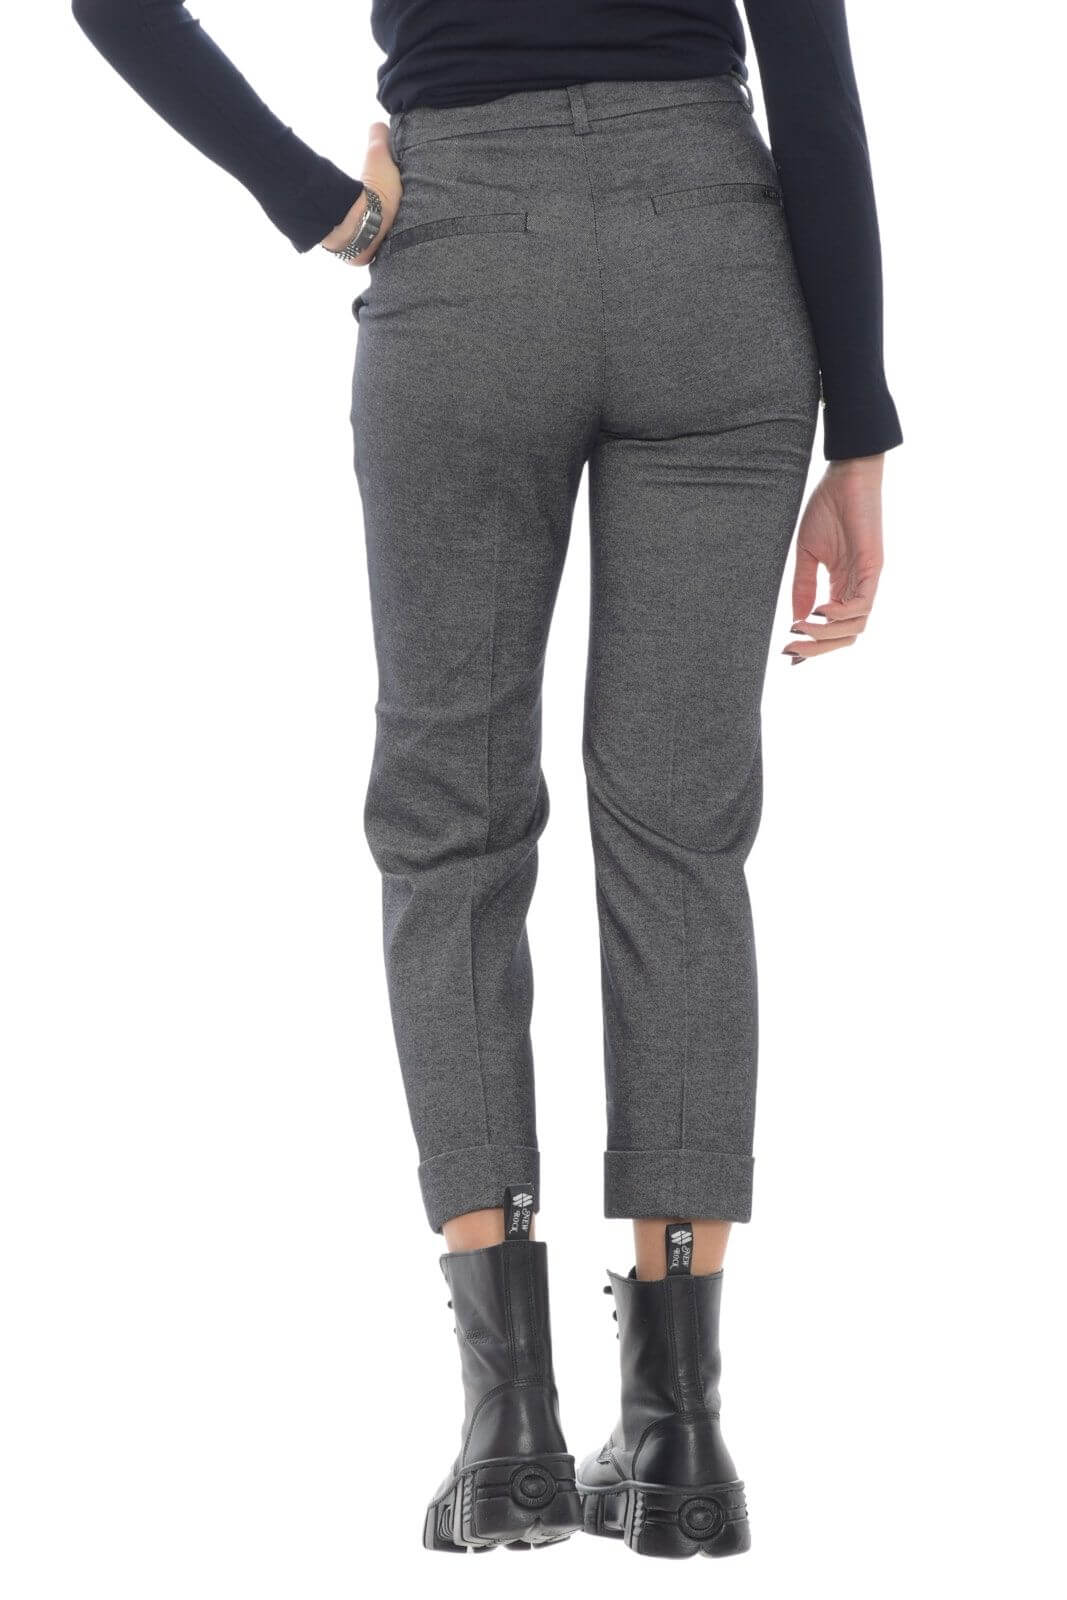 Seventy Pantalone Donna effetto jeans